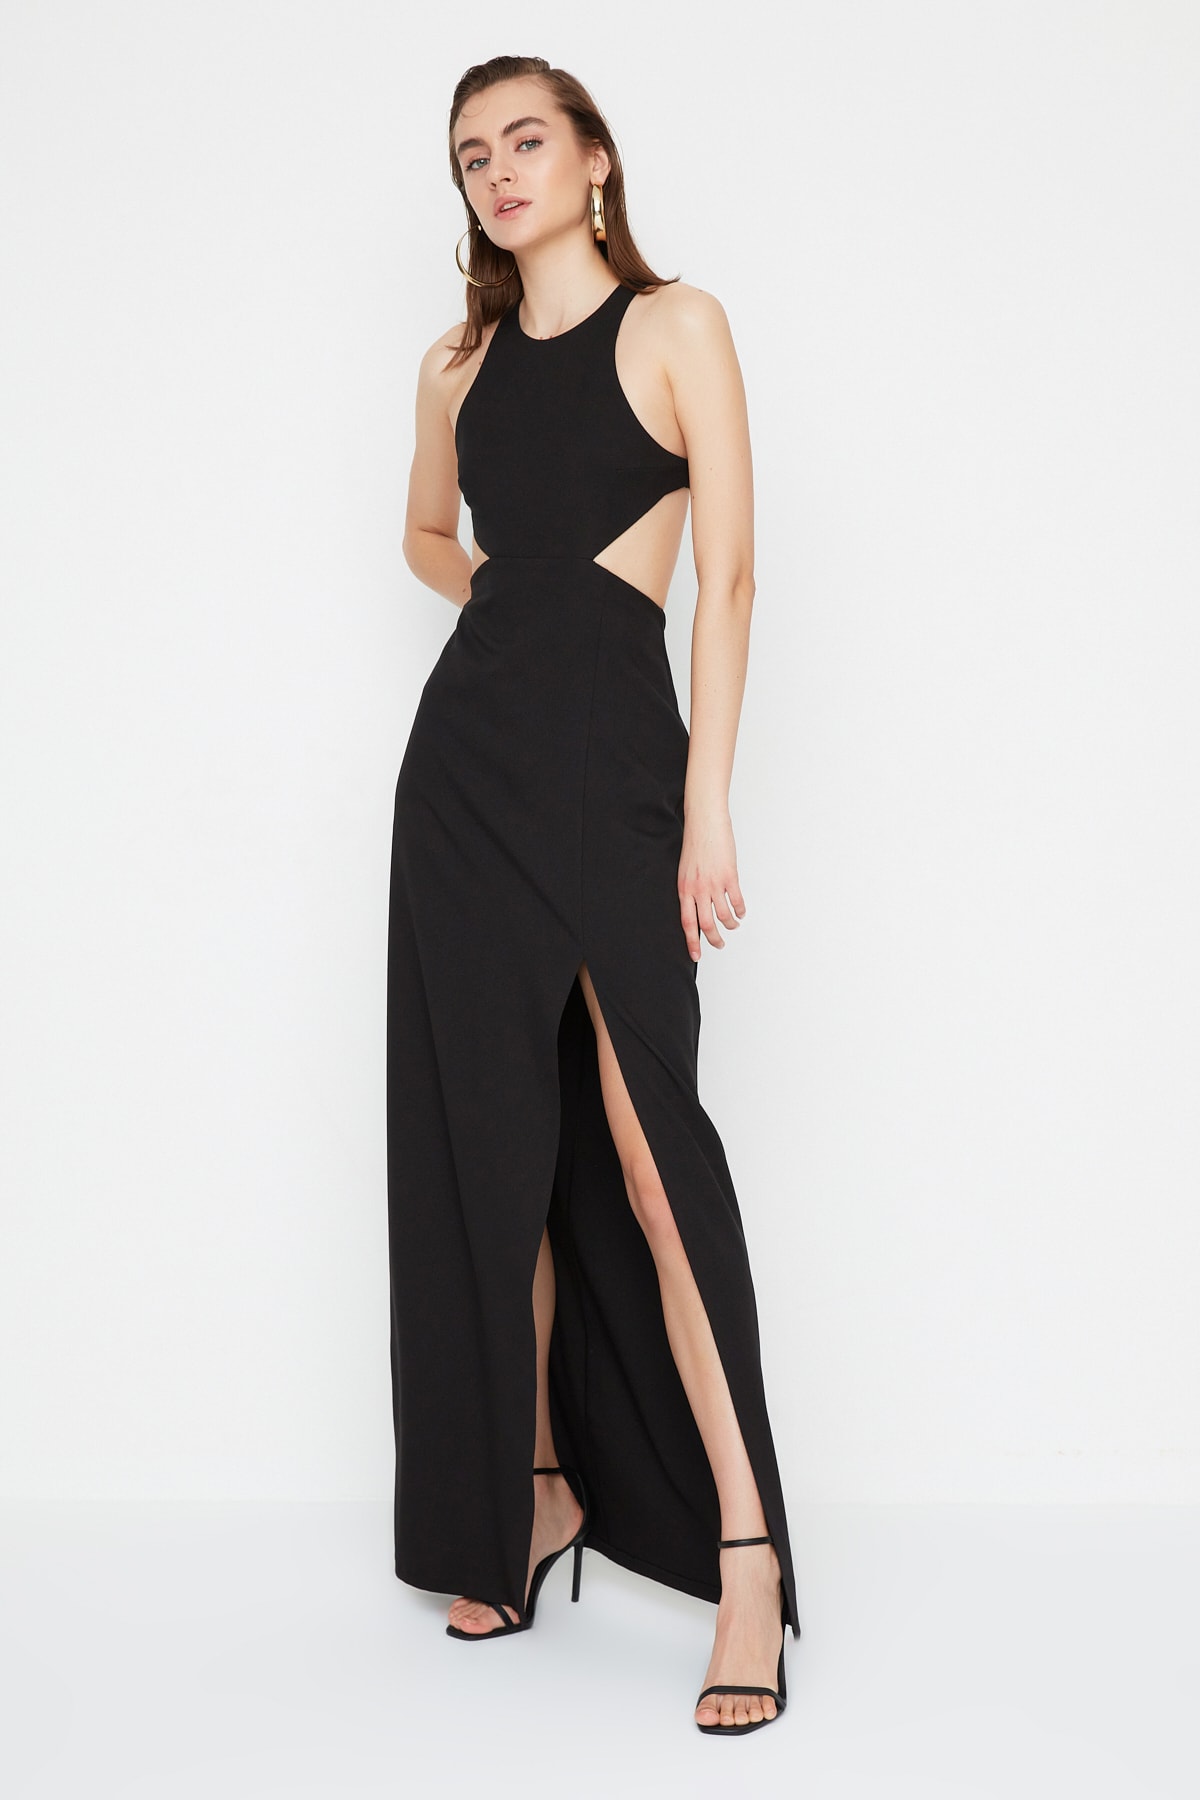 Trendyol X Sagaza Studio Black Cut Out Detailed Evening Dress